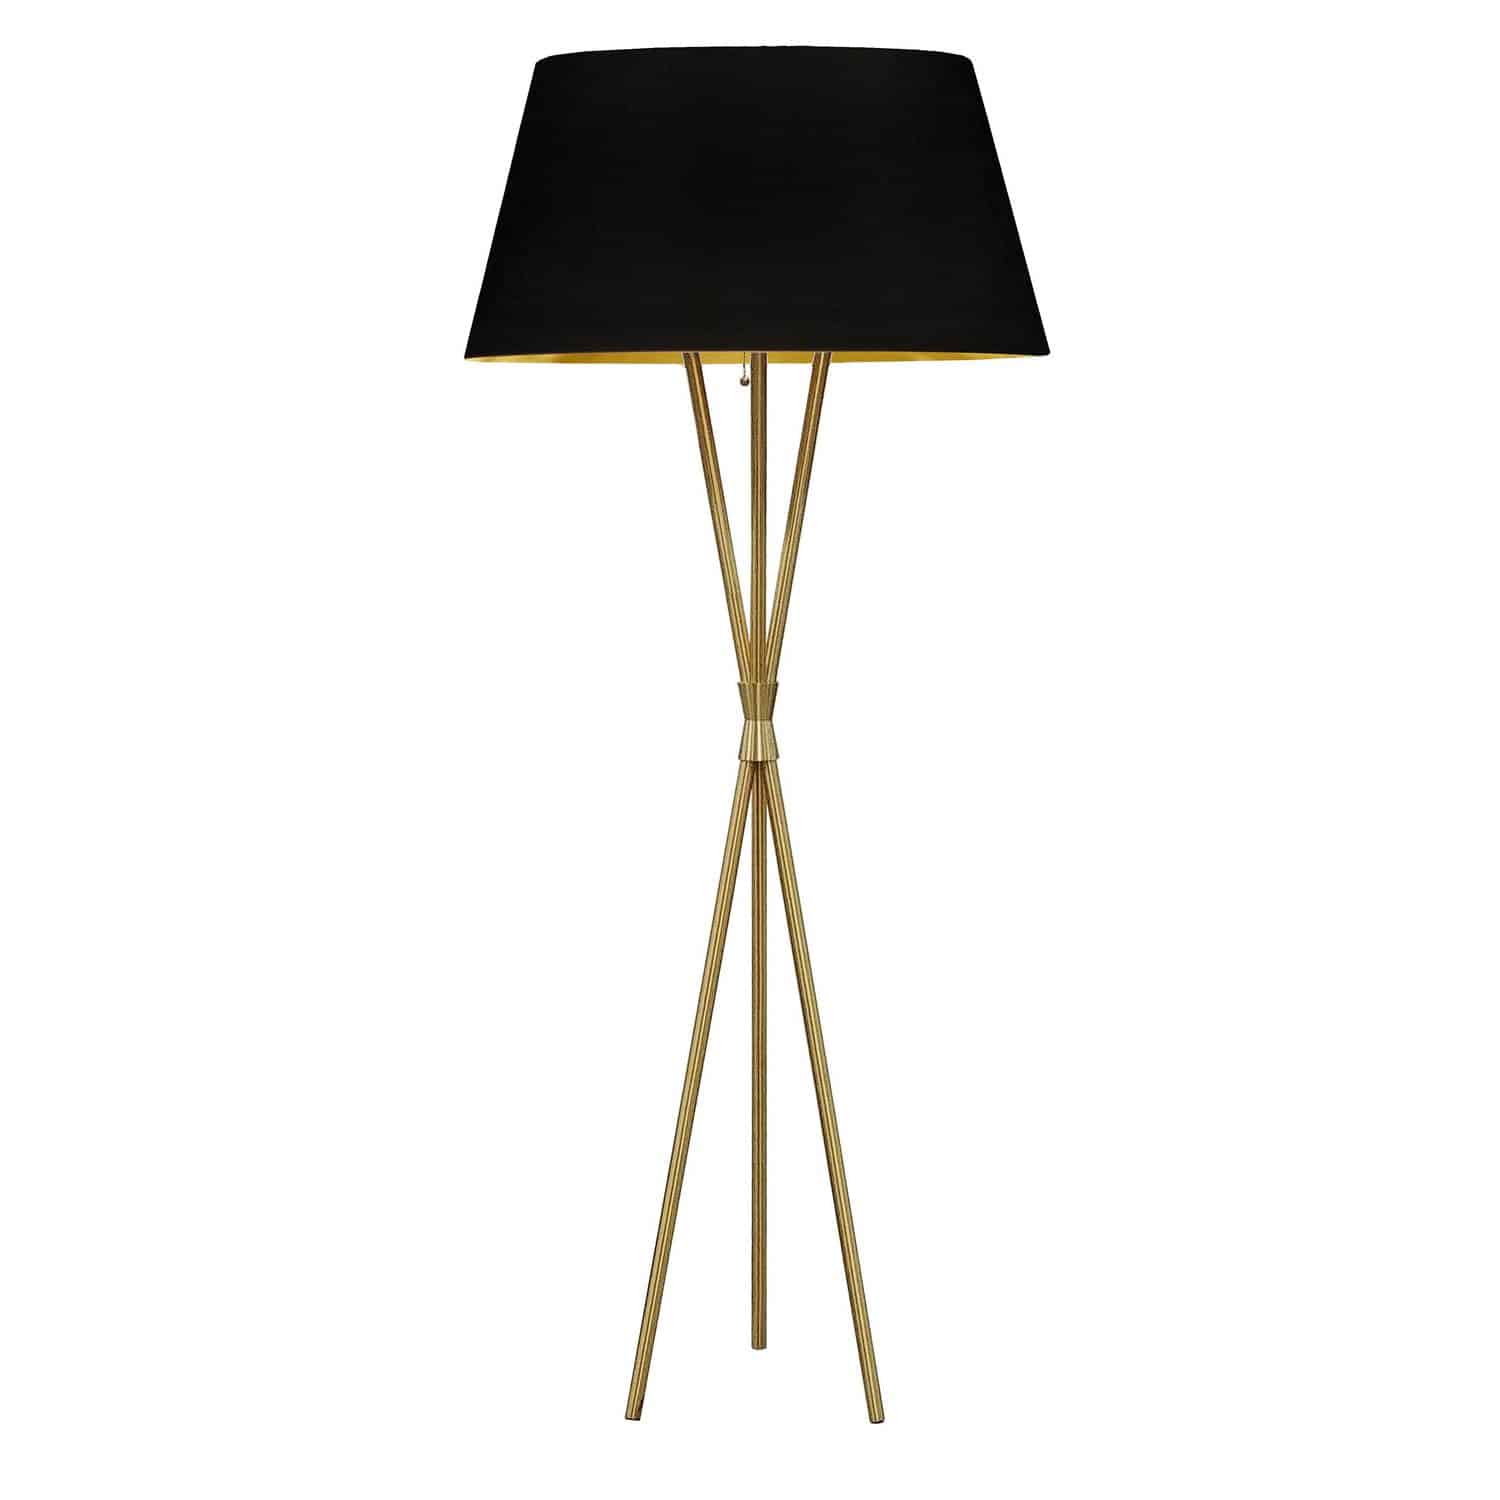 1 Light 3 Legged Aged Brass Floor Lamp, with Black-Gold Shade